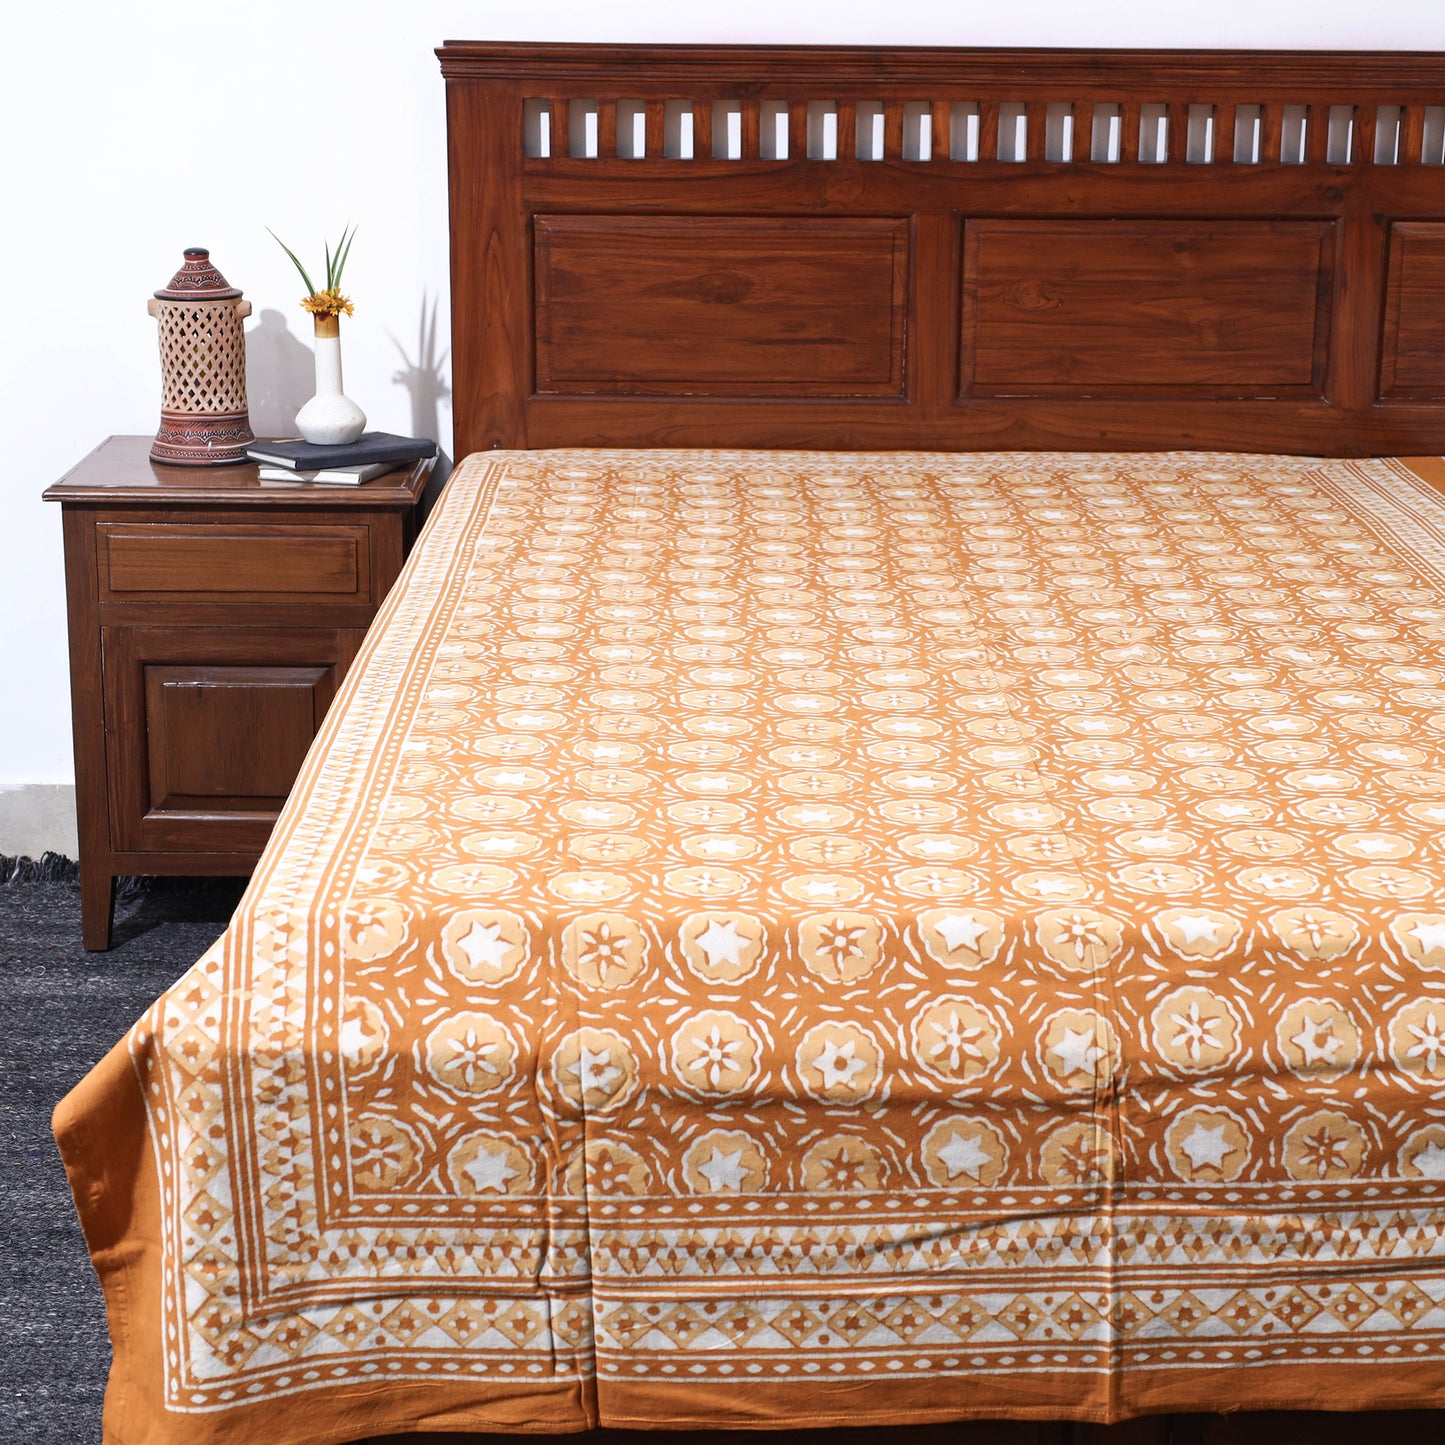 bagru single bed cover